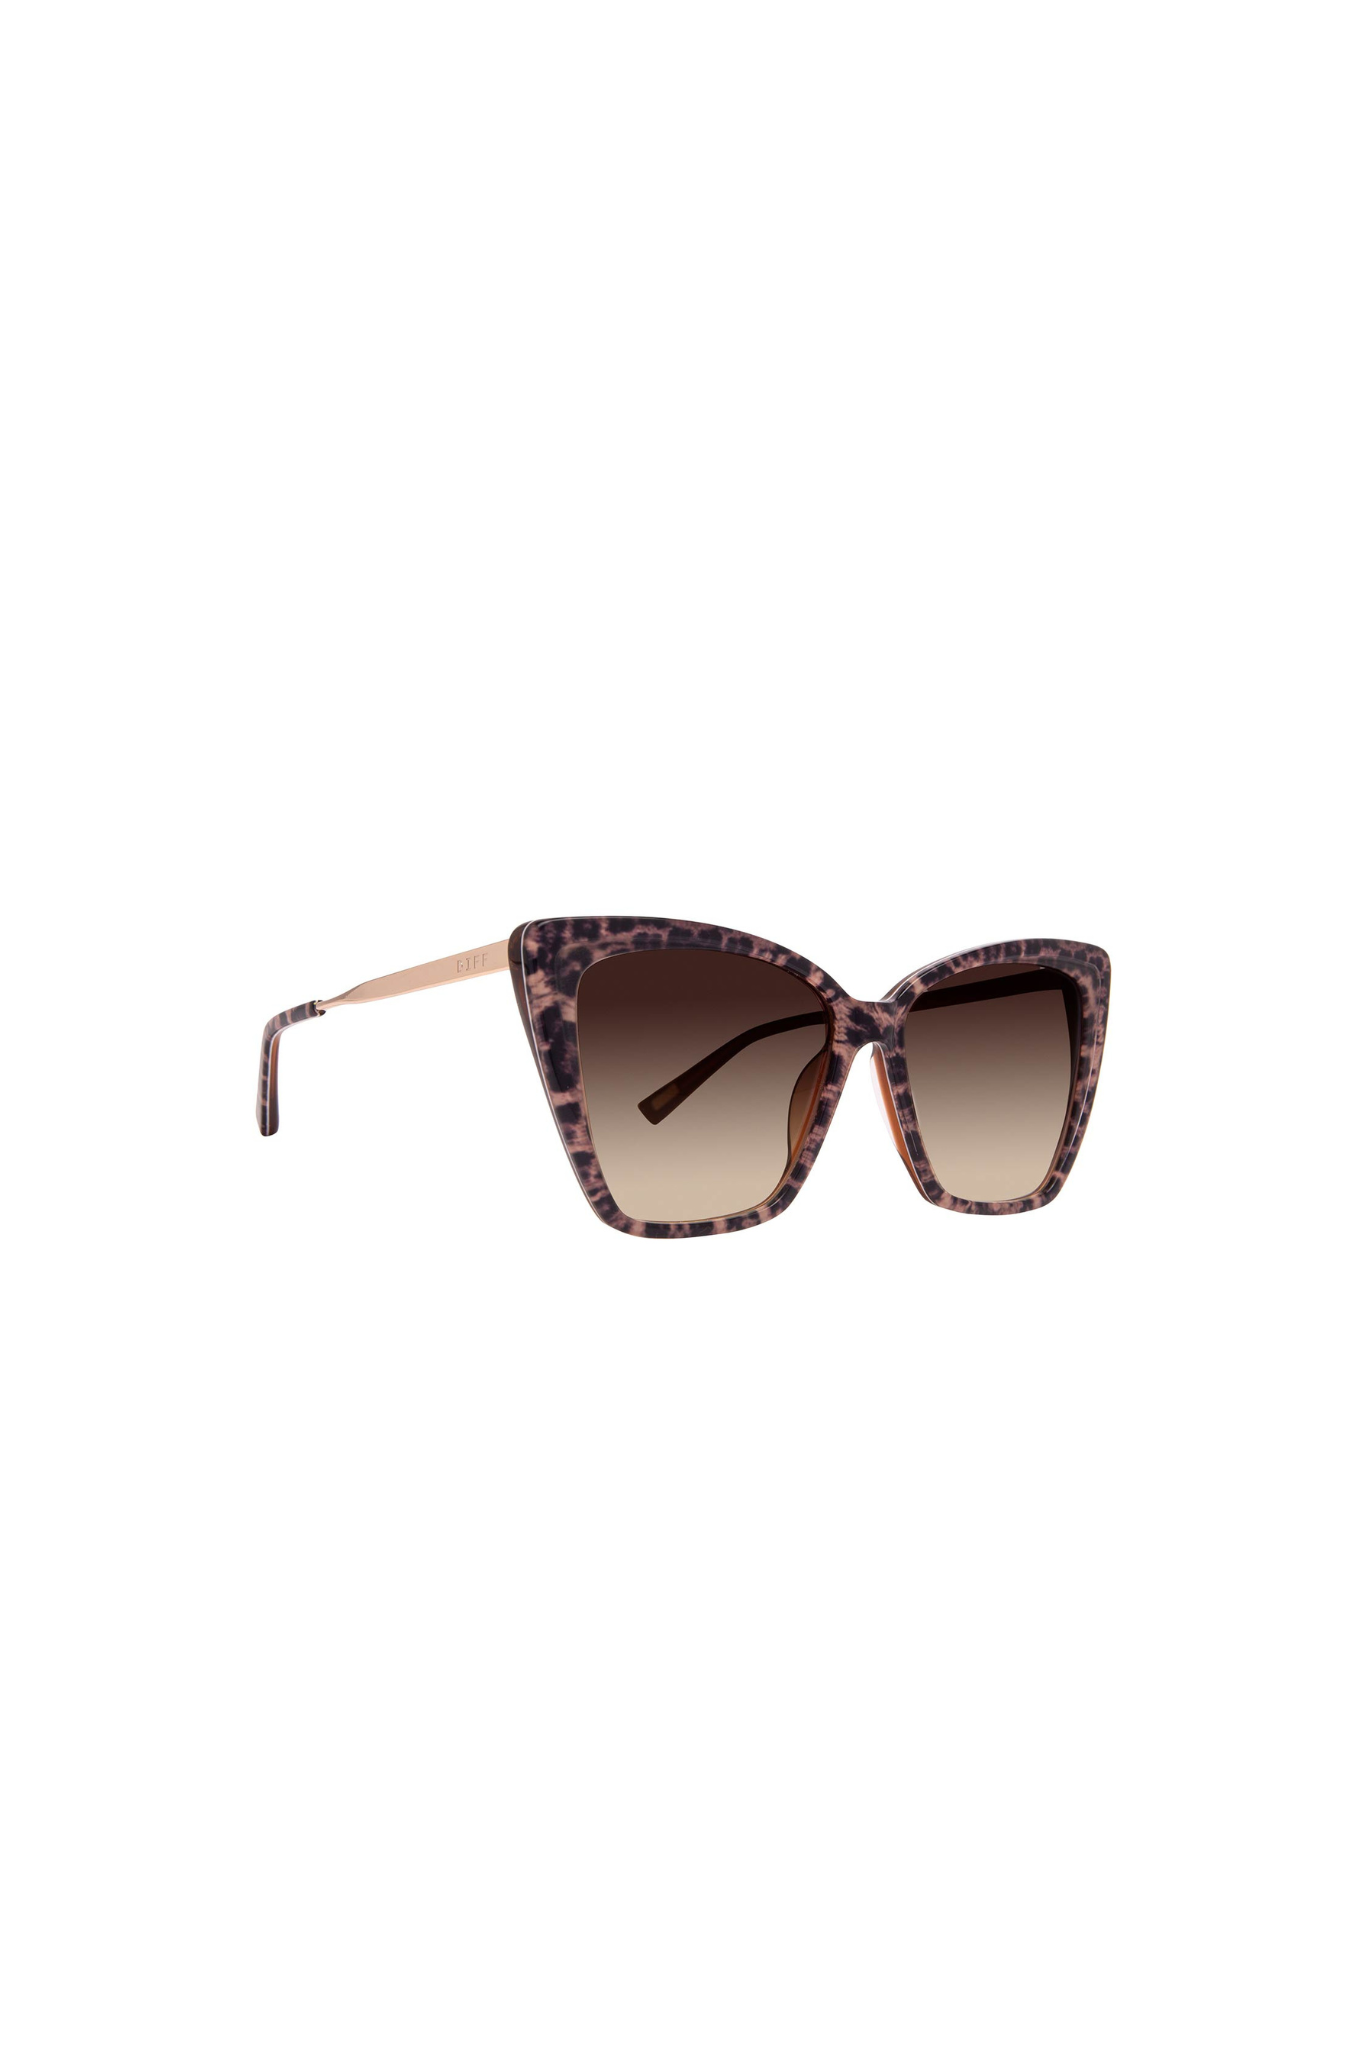 DIFF | Becky II Sunglasses - Leopard Tortoise | Sweetest Stitch RVA